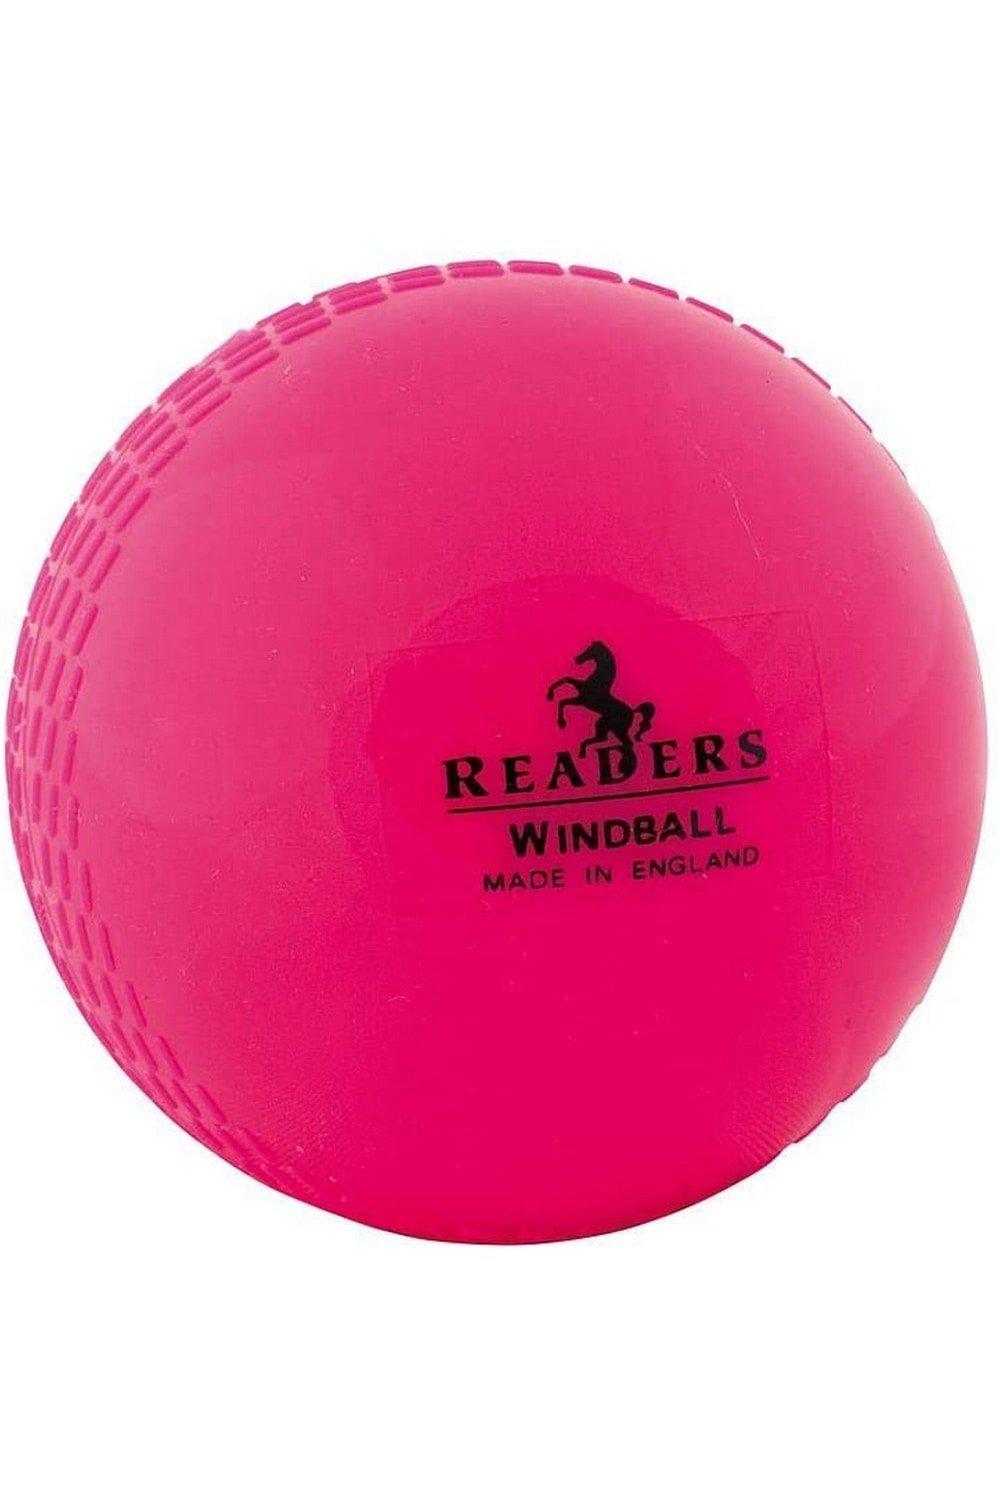 Windball Cricket Ball